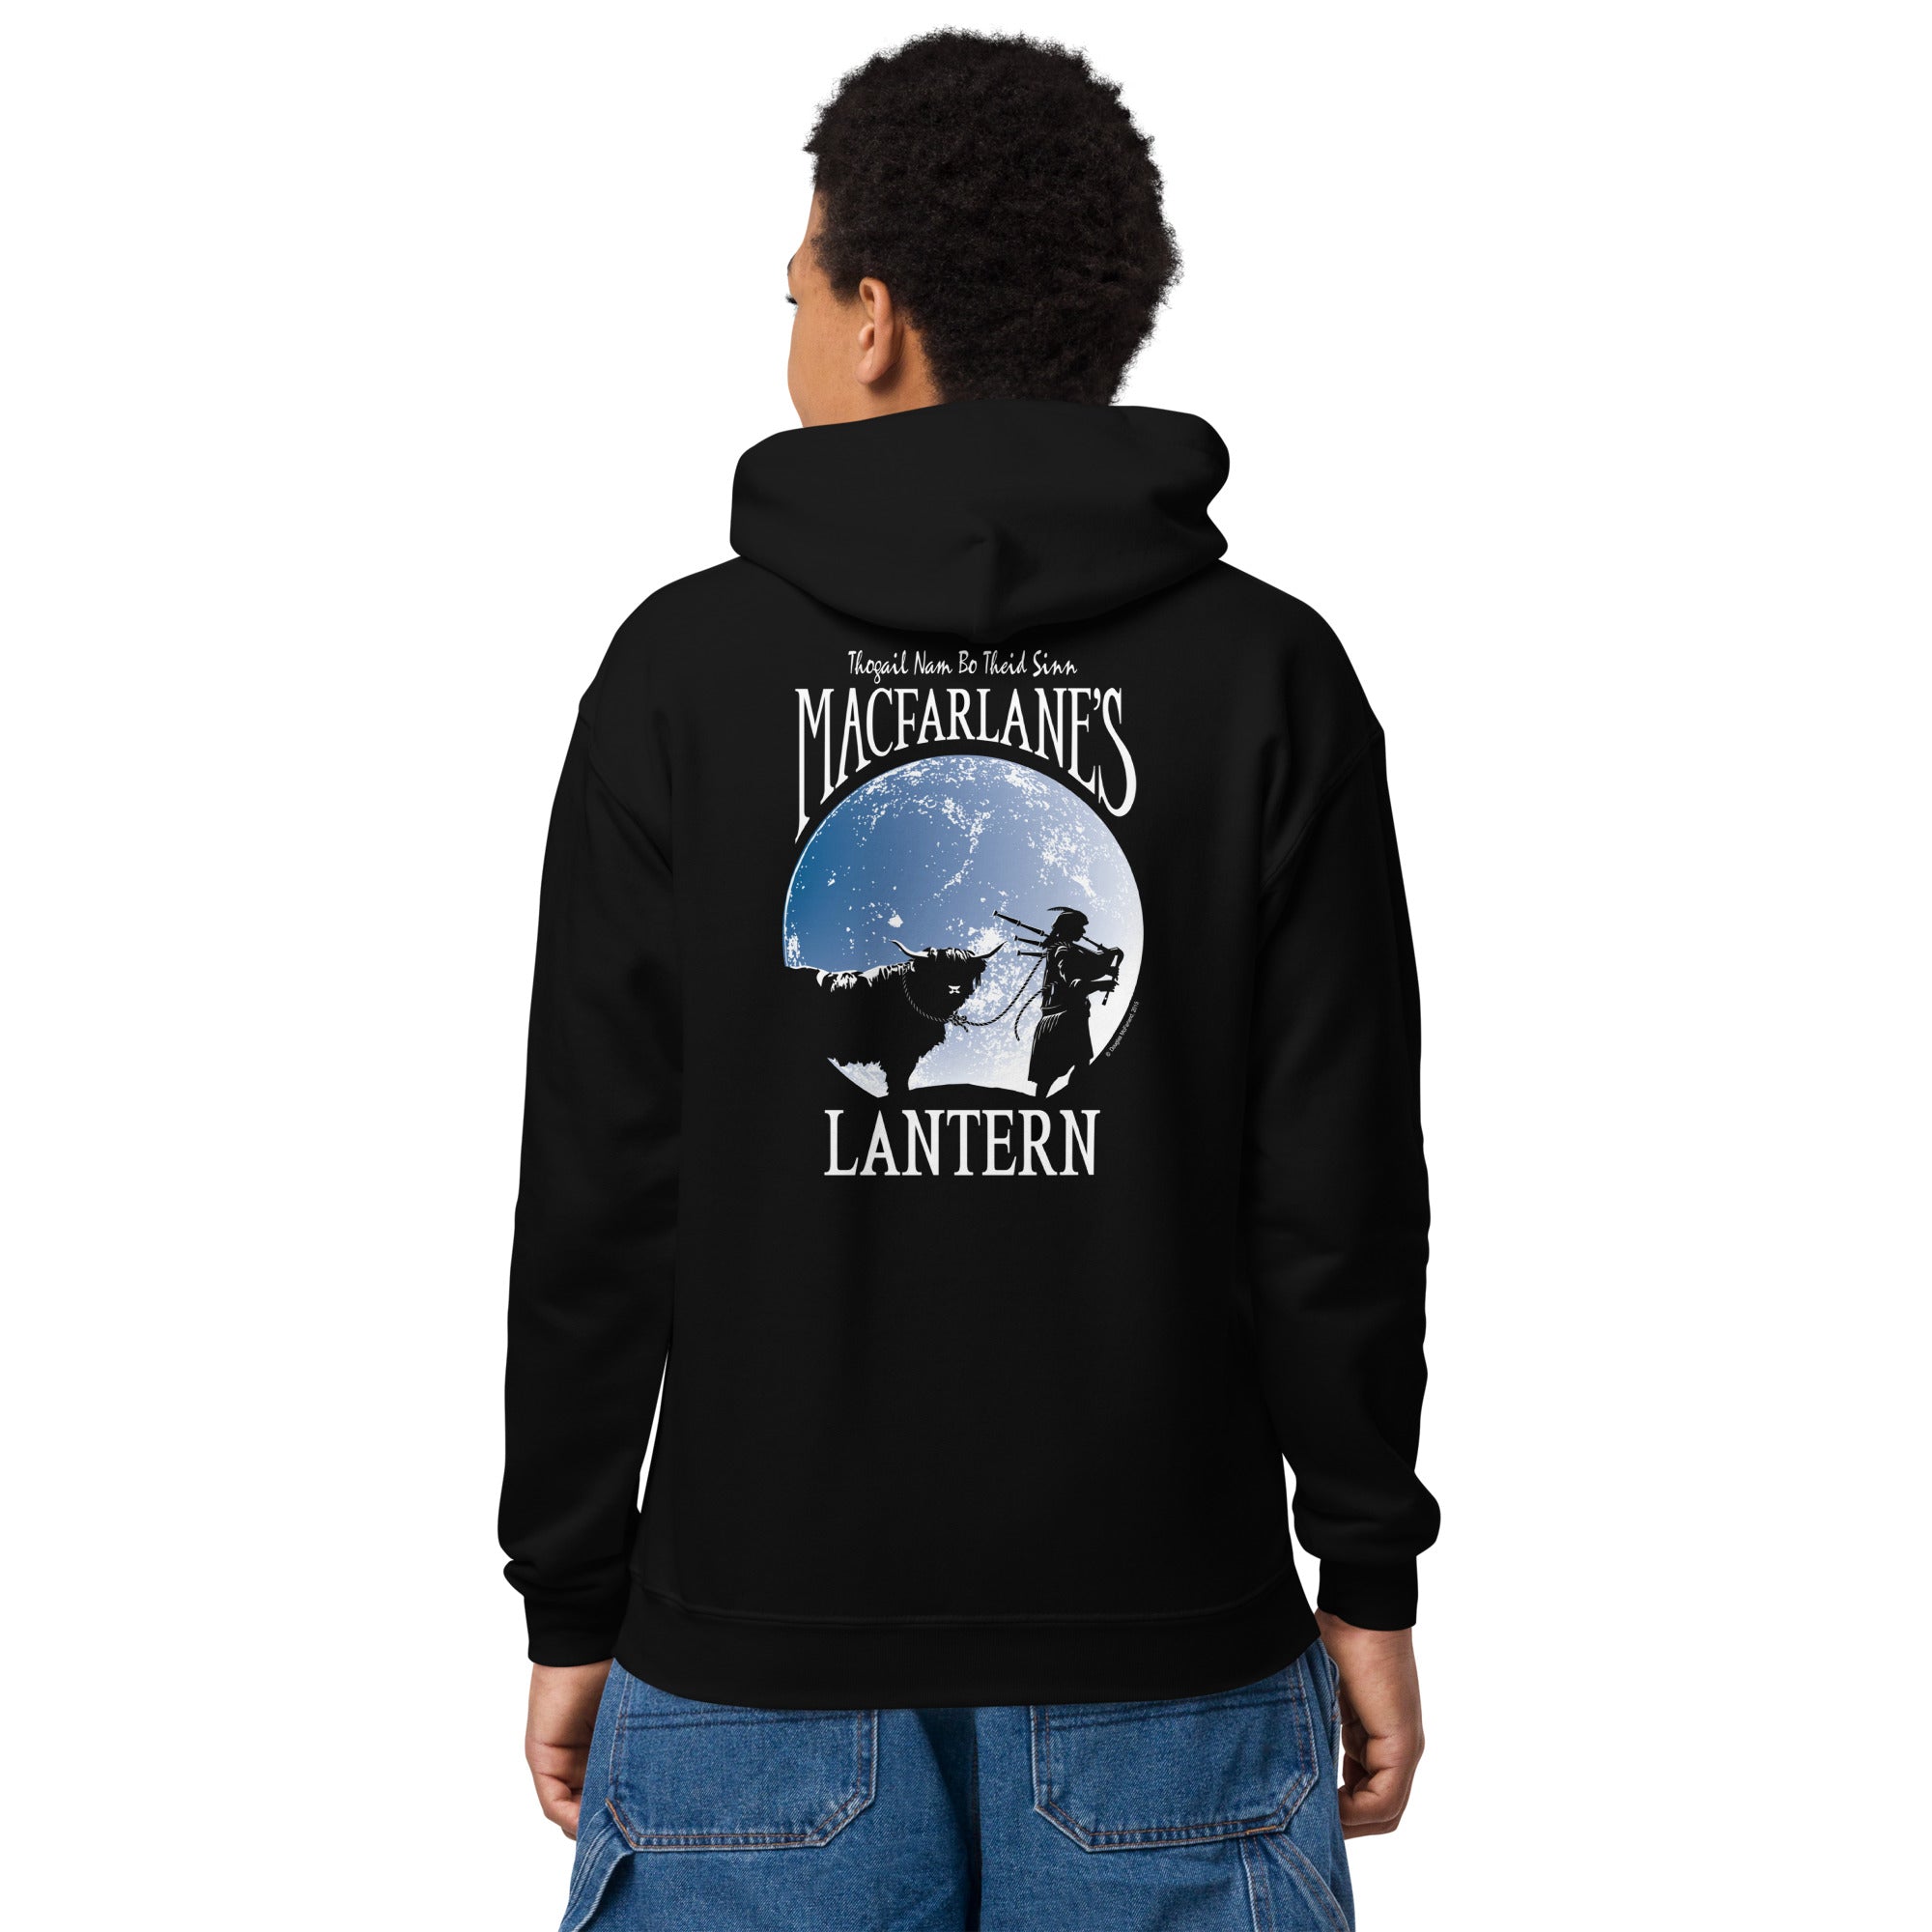 MACFARLANE'S LANTERN - Youth heavy blend hoodie